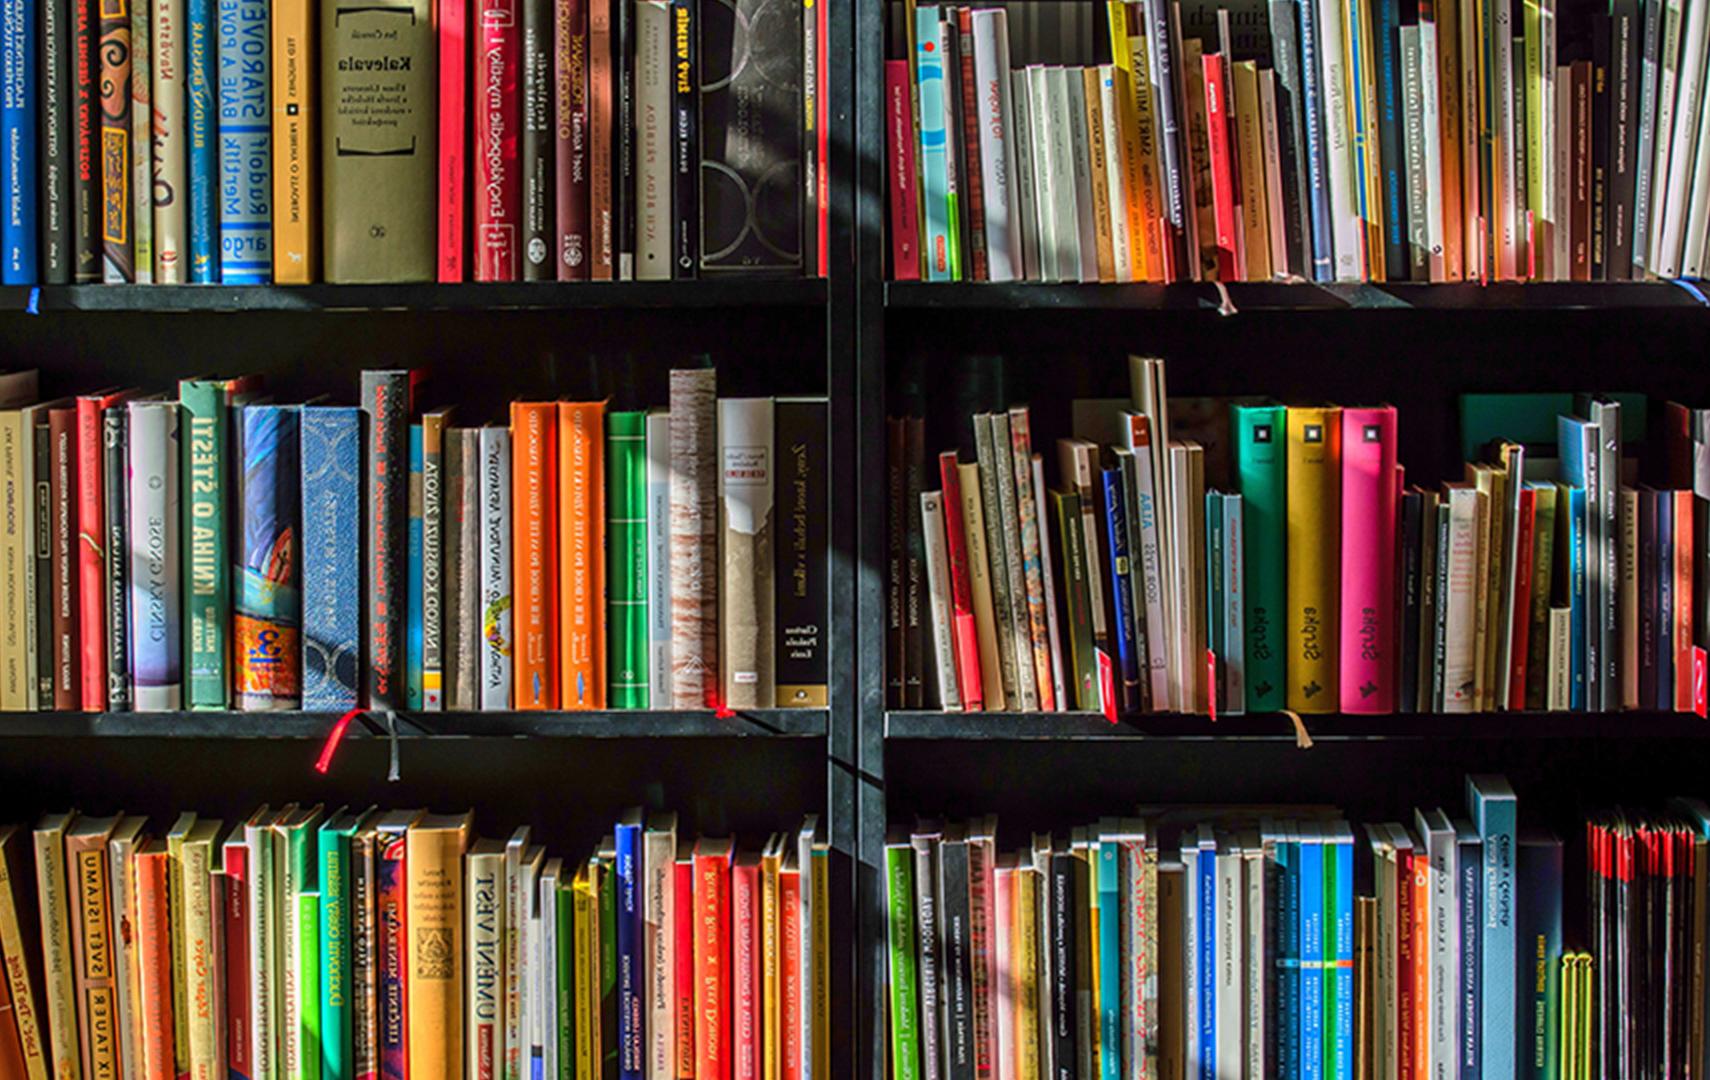 bookshelves in the library